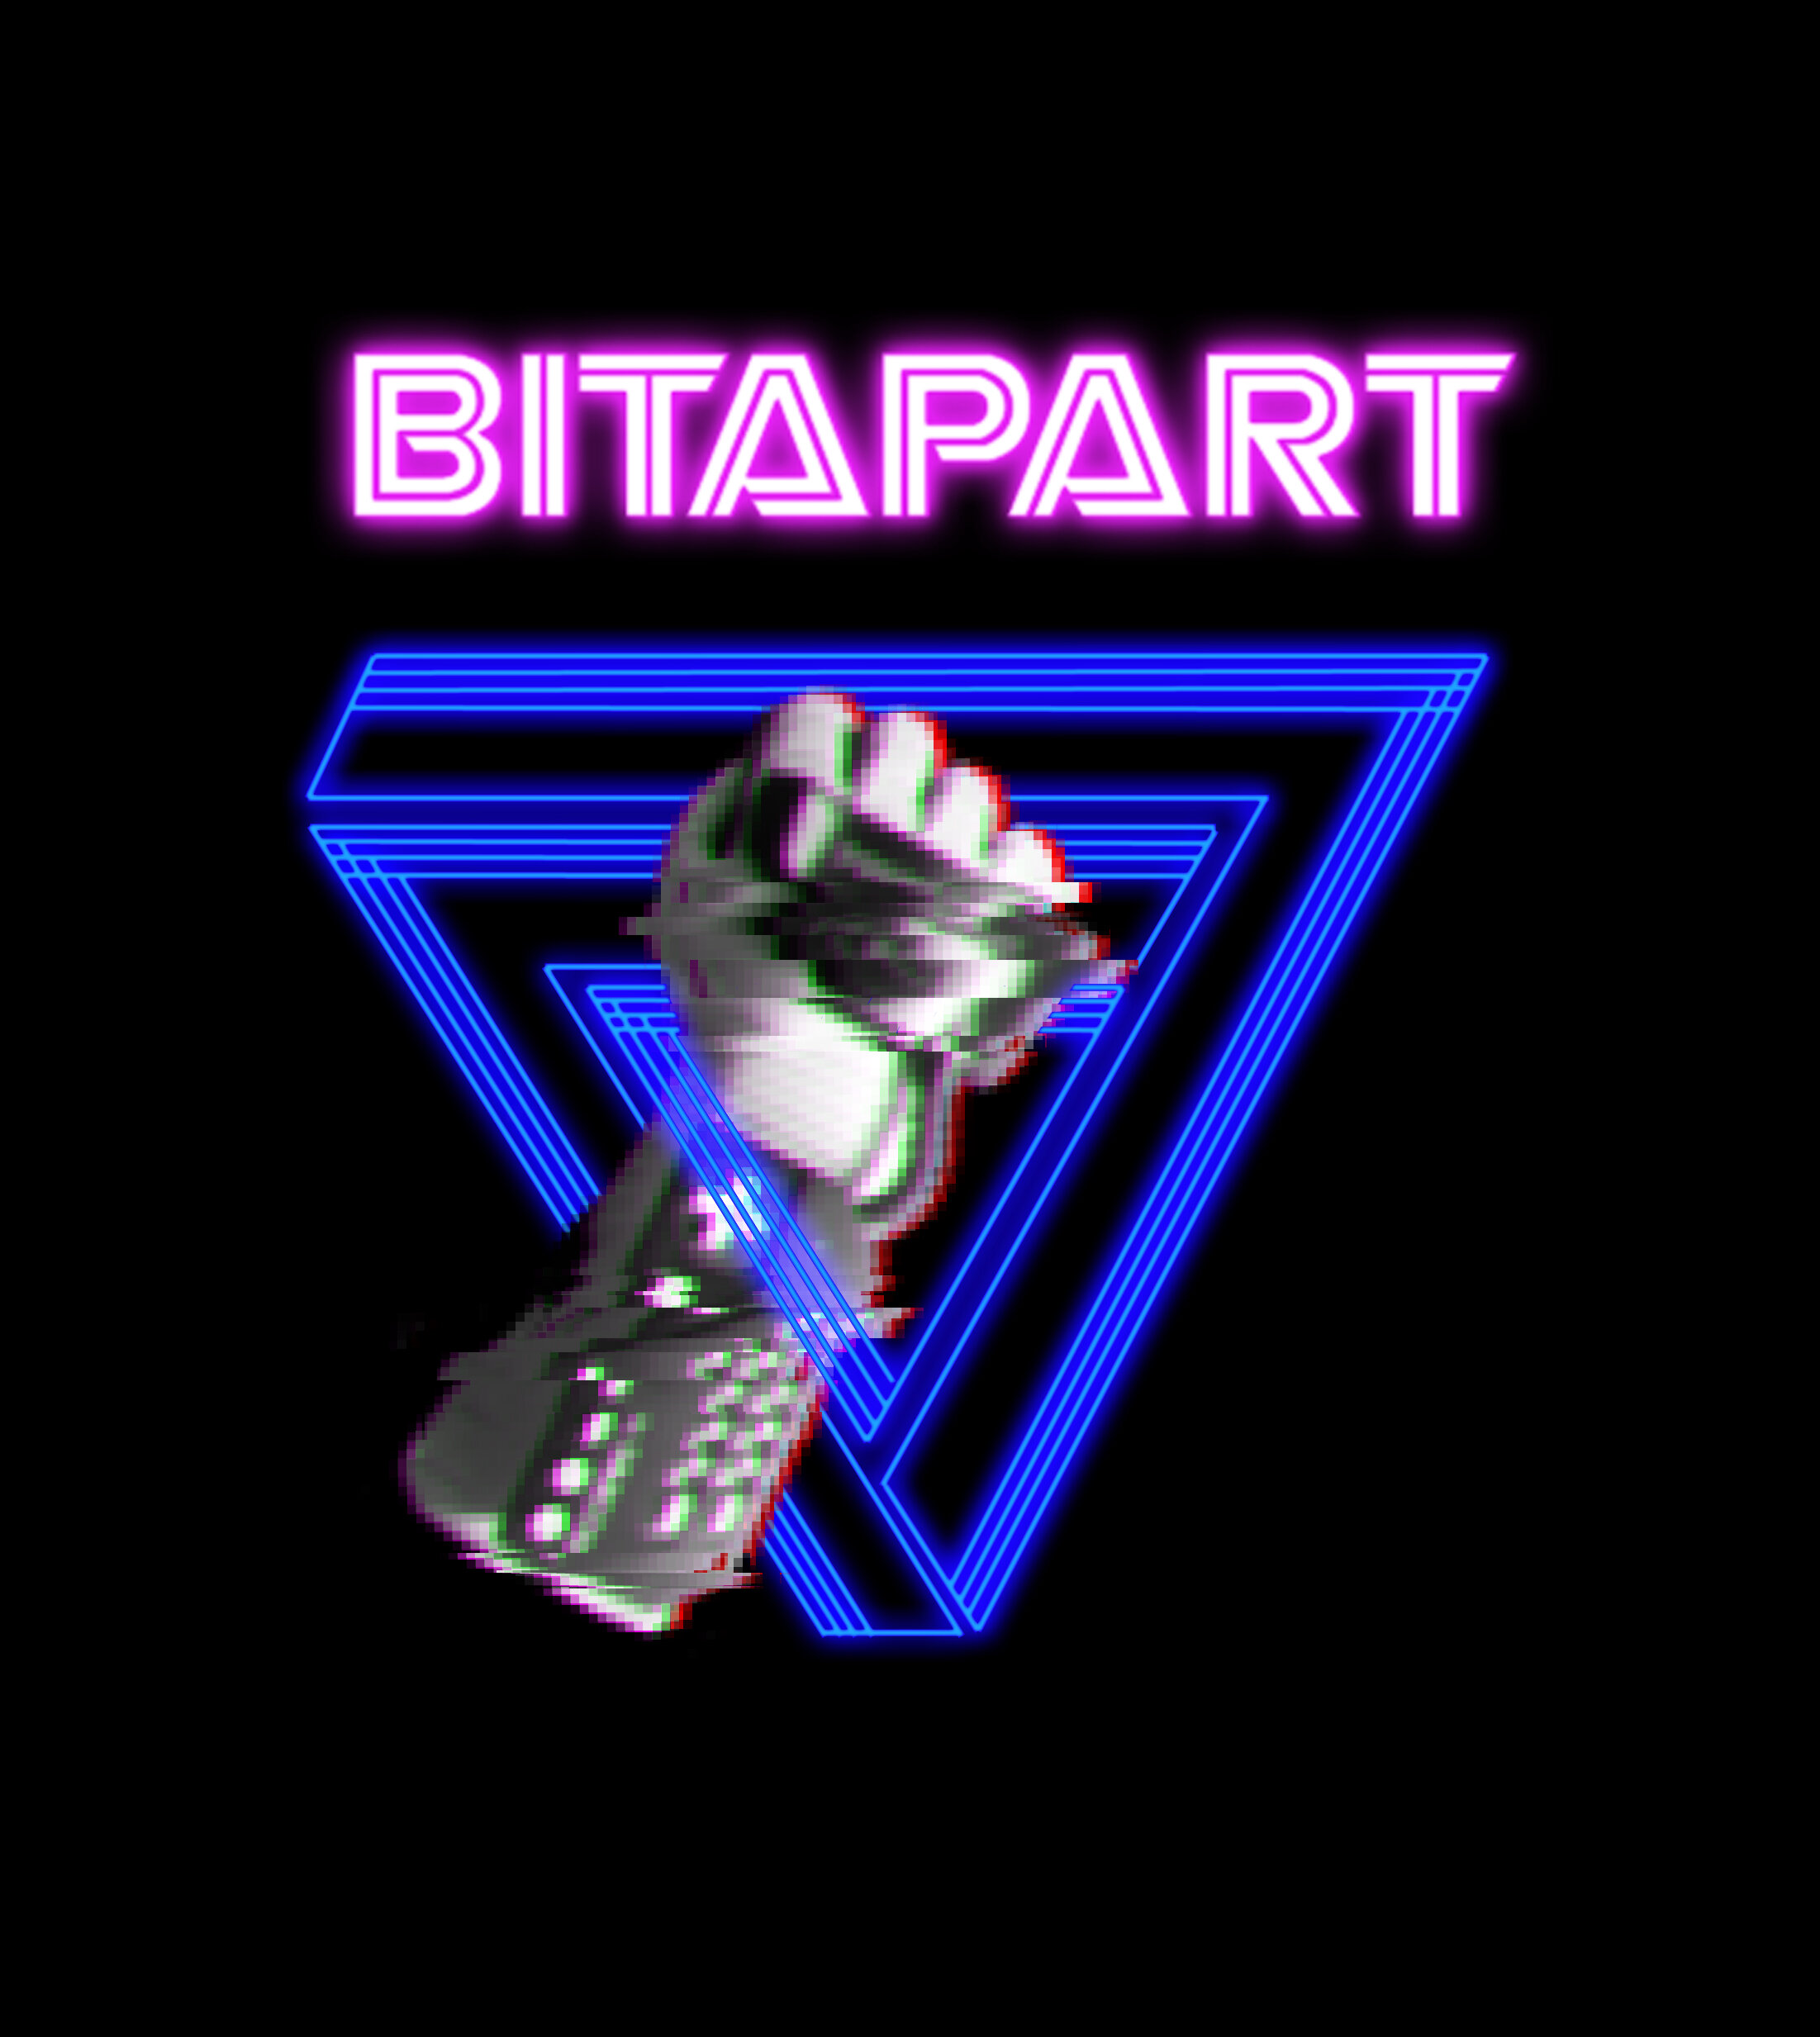 Bitapart